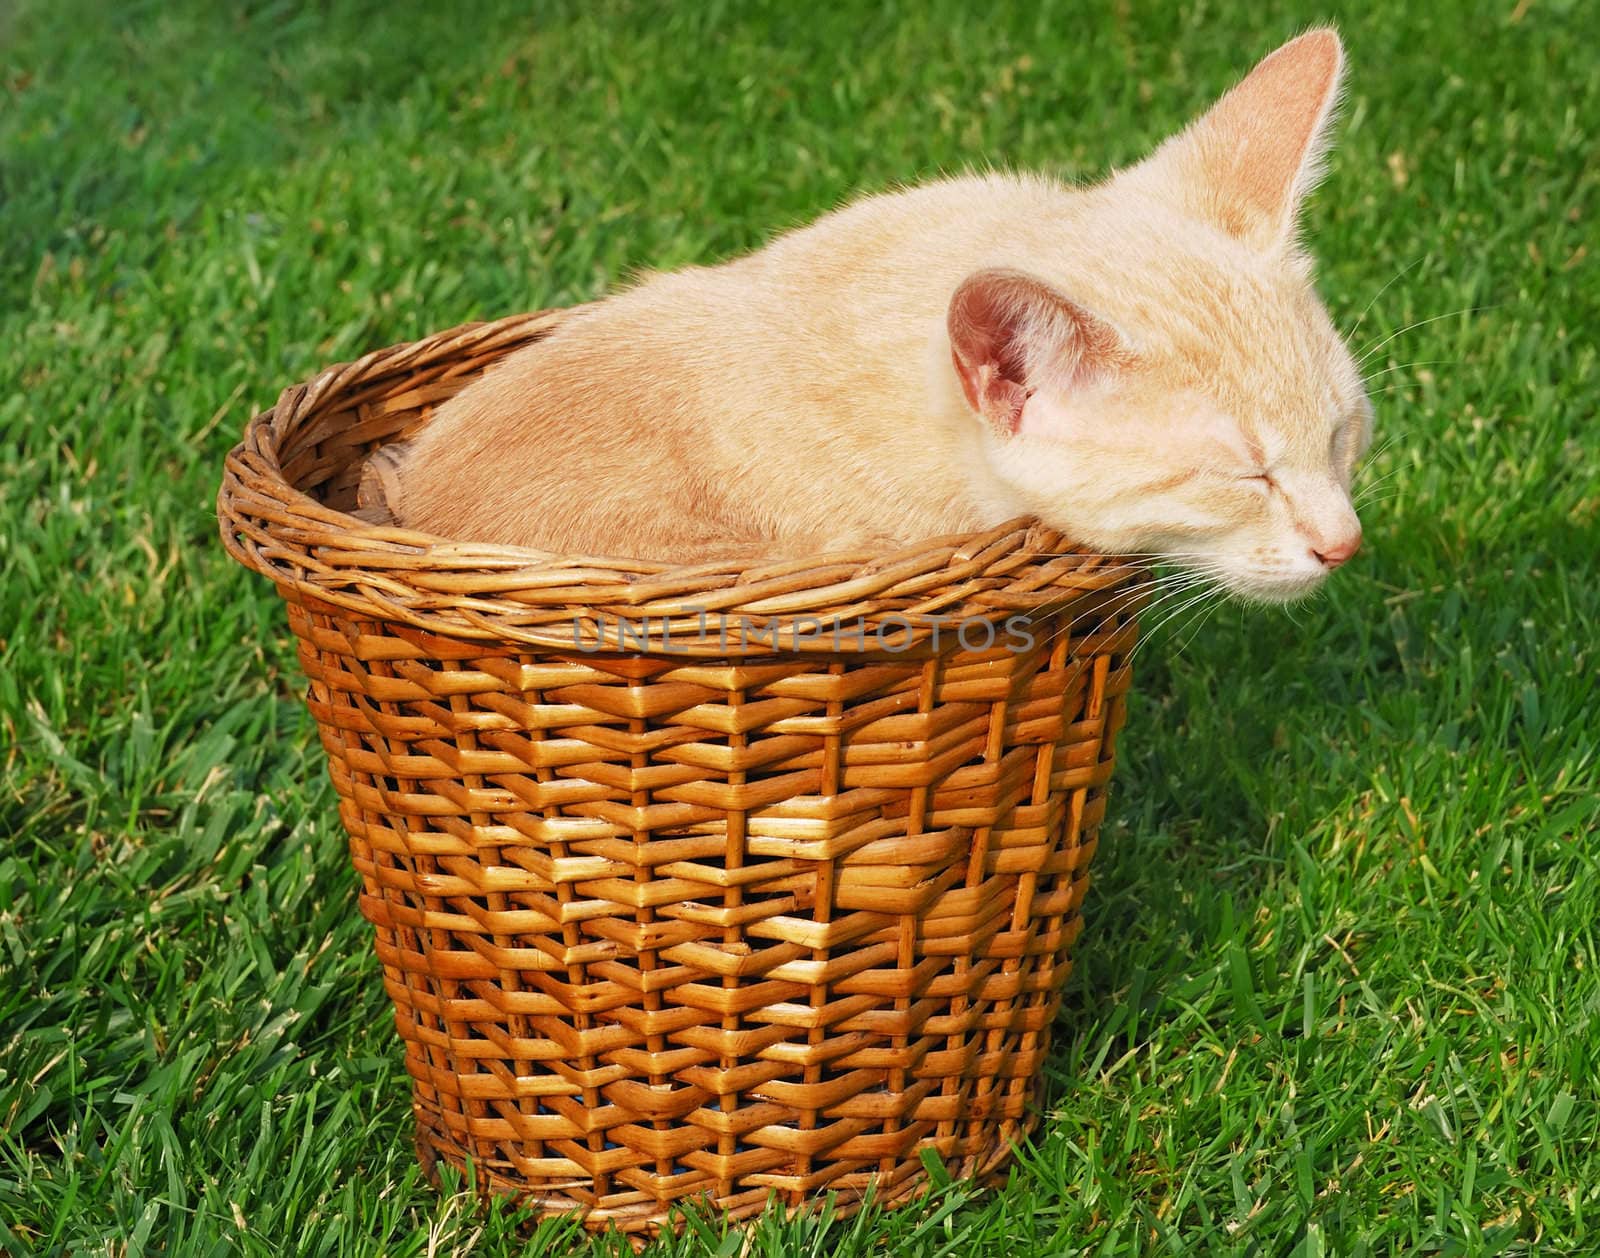 Kitten sleeping in basket by whitechild